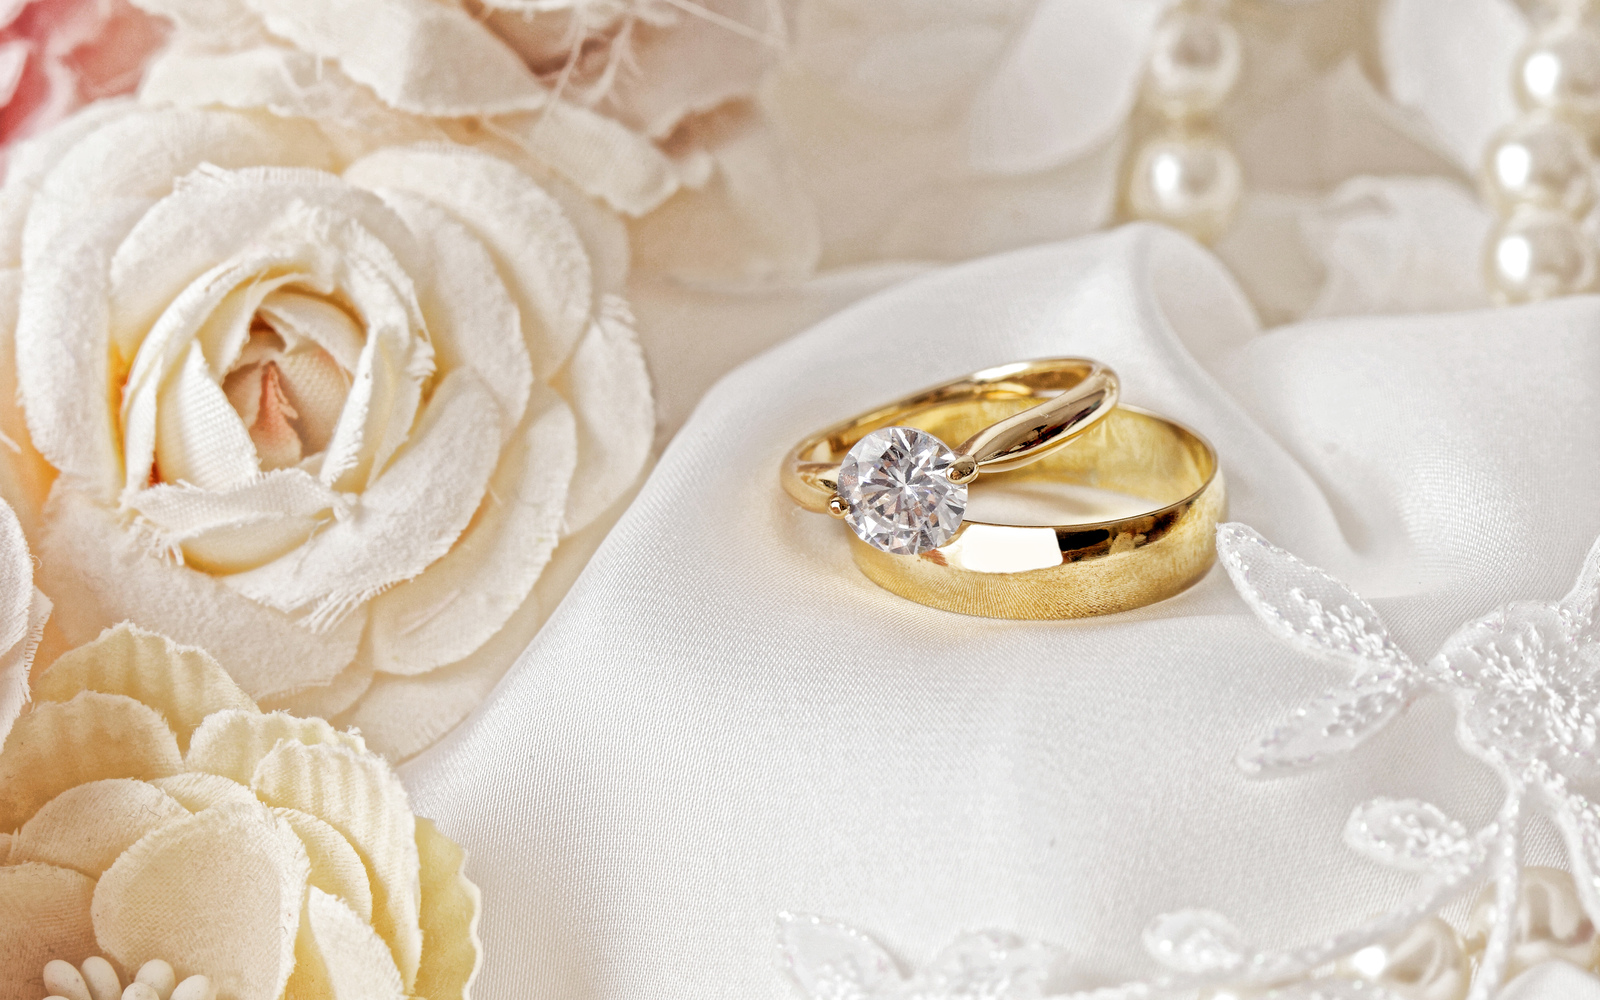 wedding-rings-wedding-concepts-gold-rings-roses-rings-on-silk-fabric.jpg